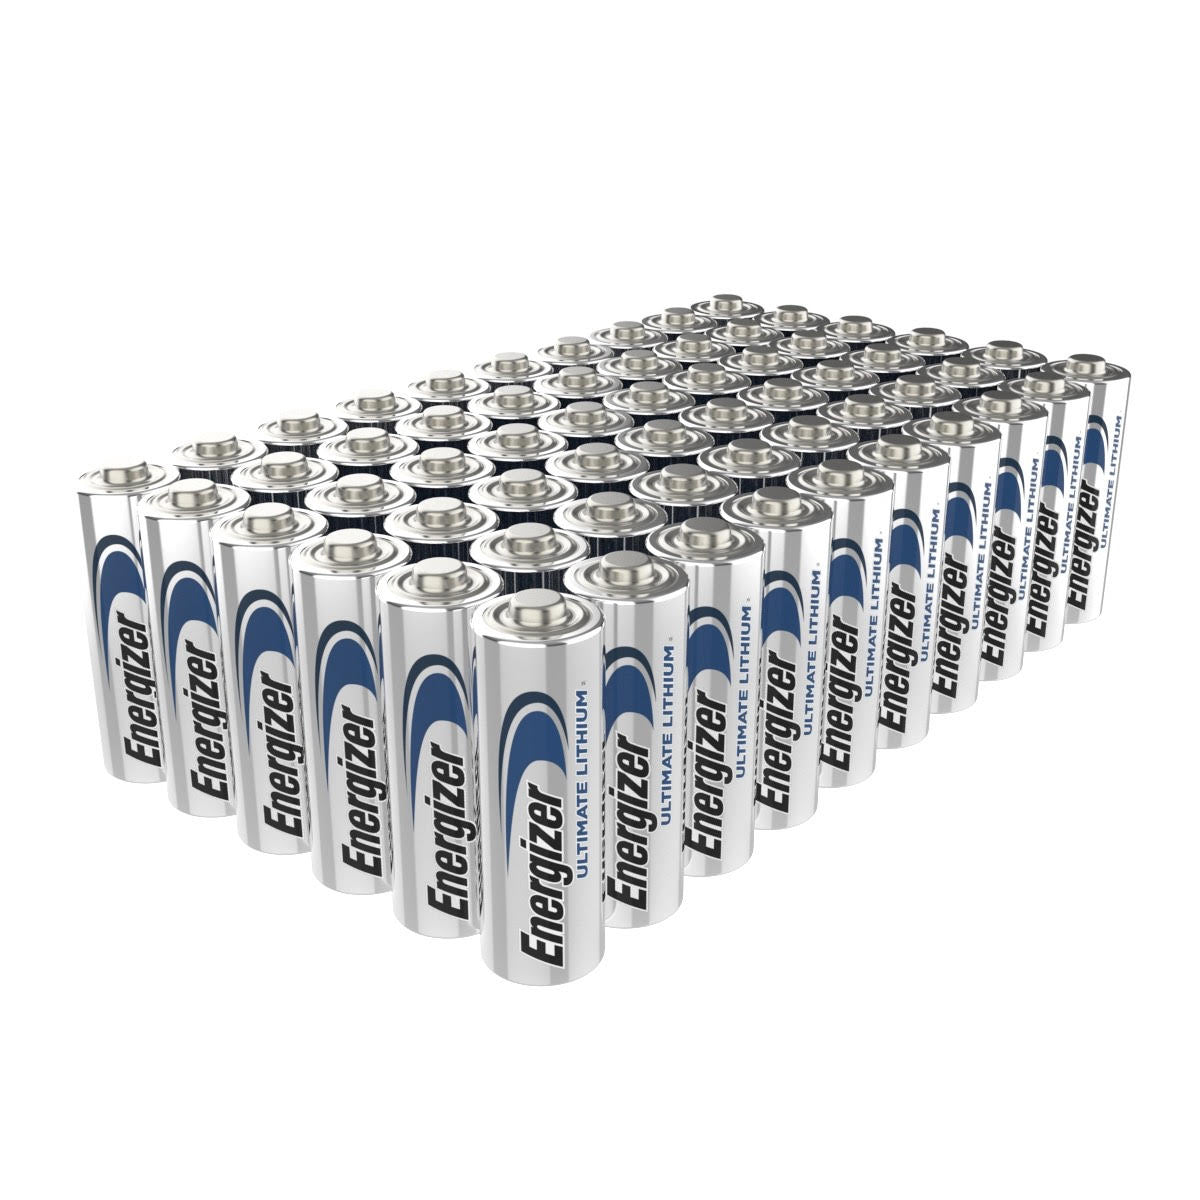 Energizer Ultimate Lithium AA LR06 Batteries